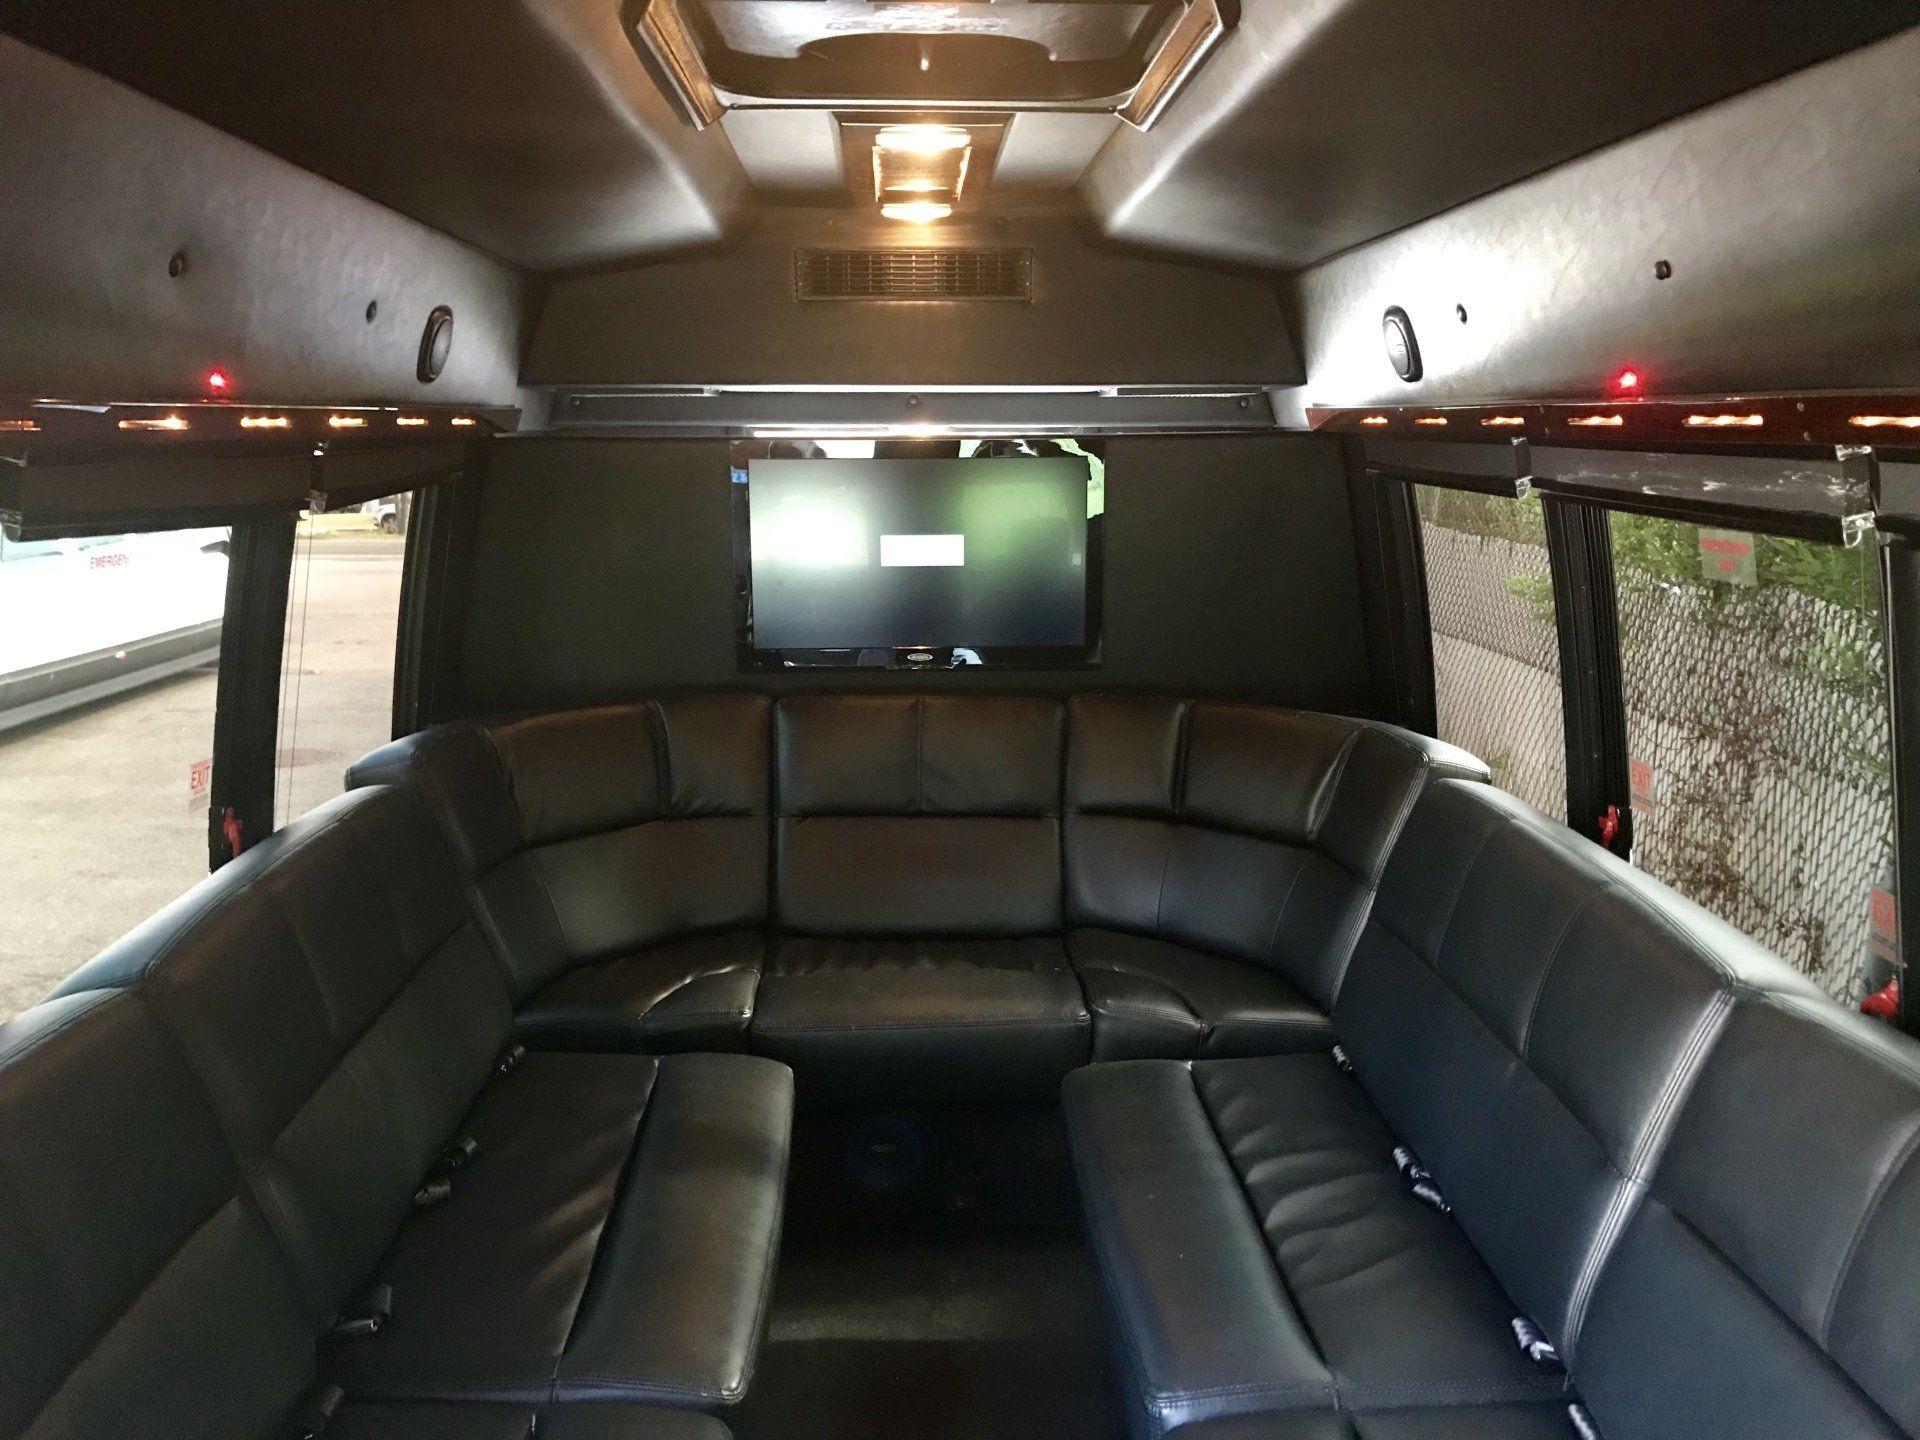 12-13 passenger limousine interior - East Bridgewater MA Extreme Limousine